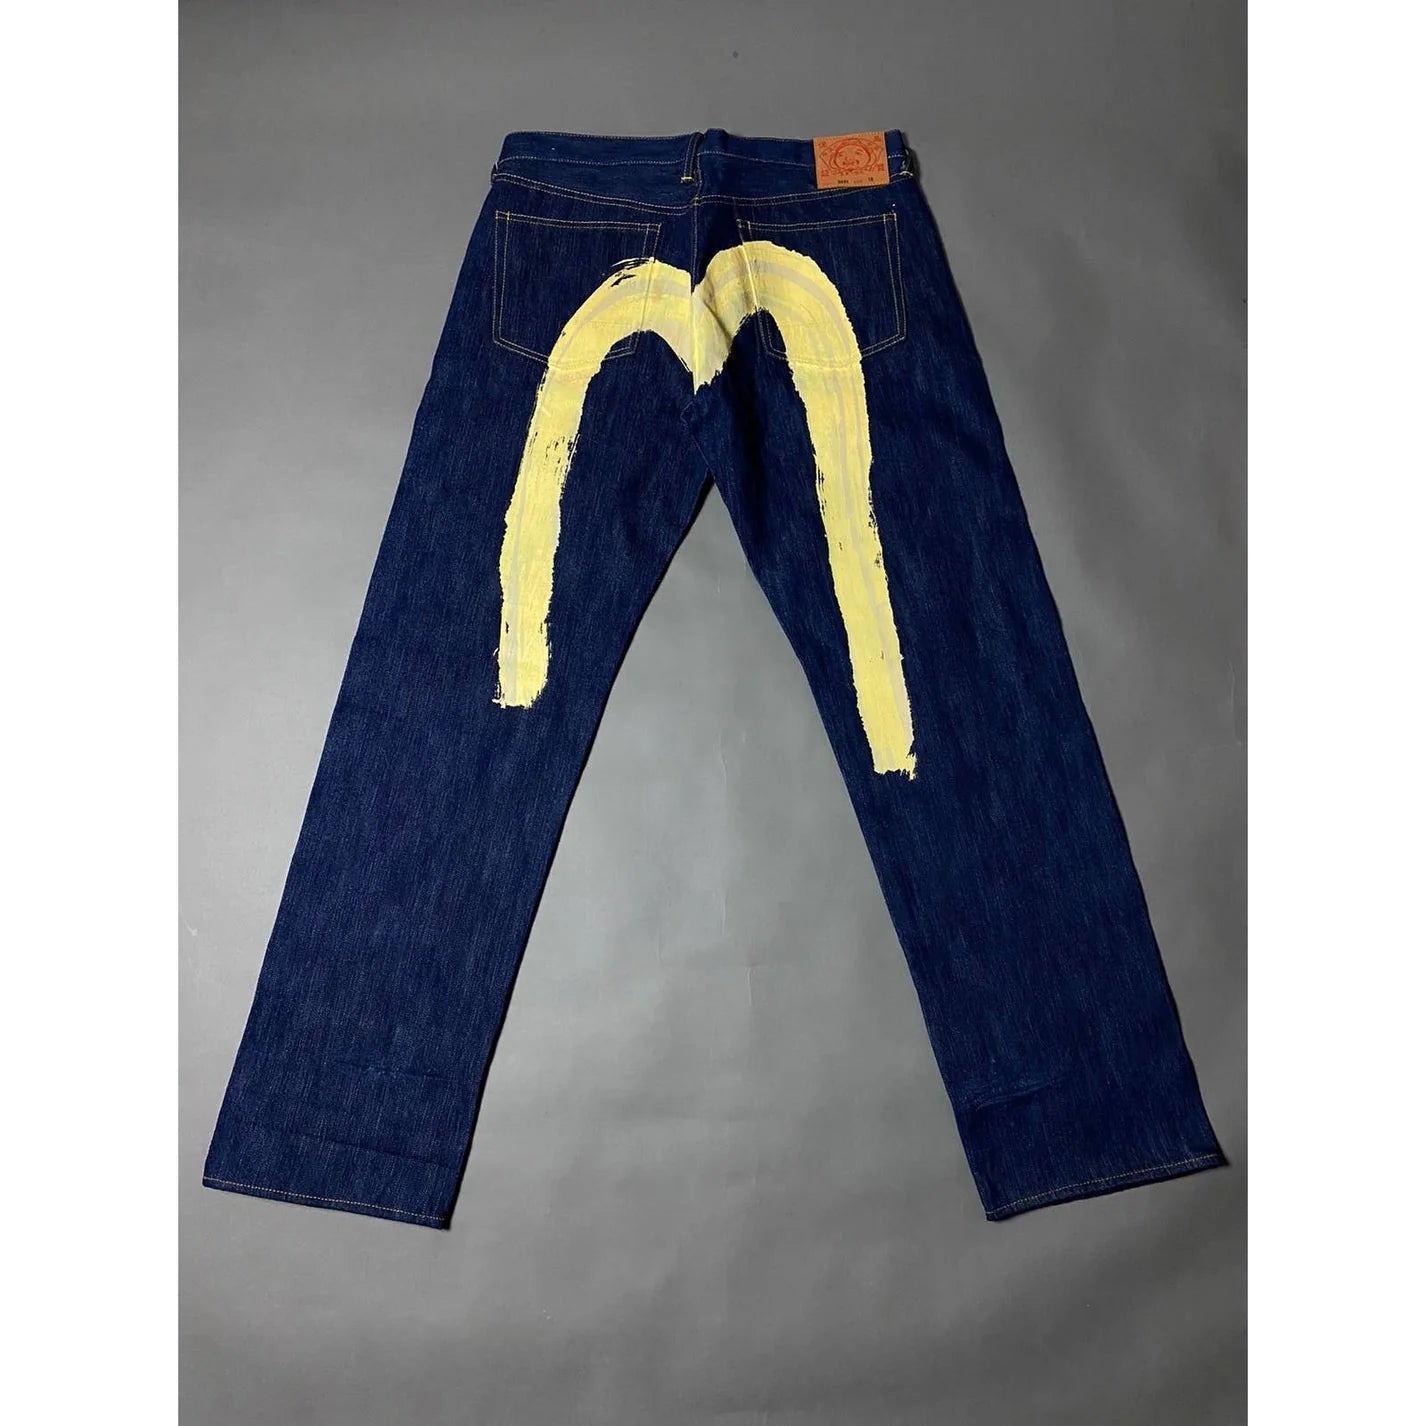 Evisu Japan - Vintage Selvedge Navy Jeans Yellow Daicock Lodz Polska tyl2